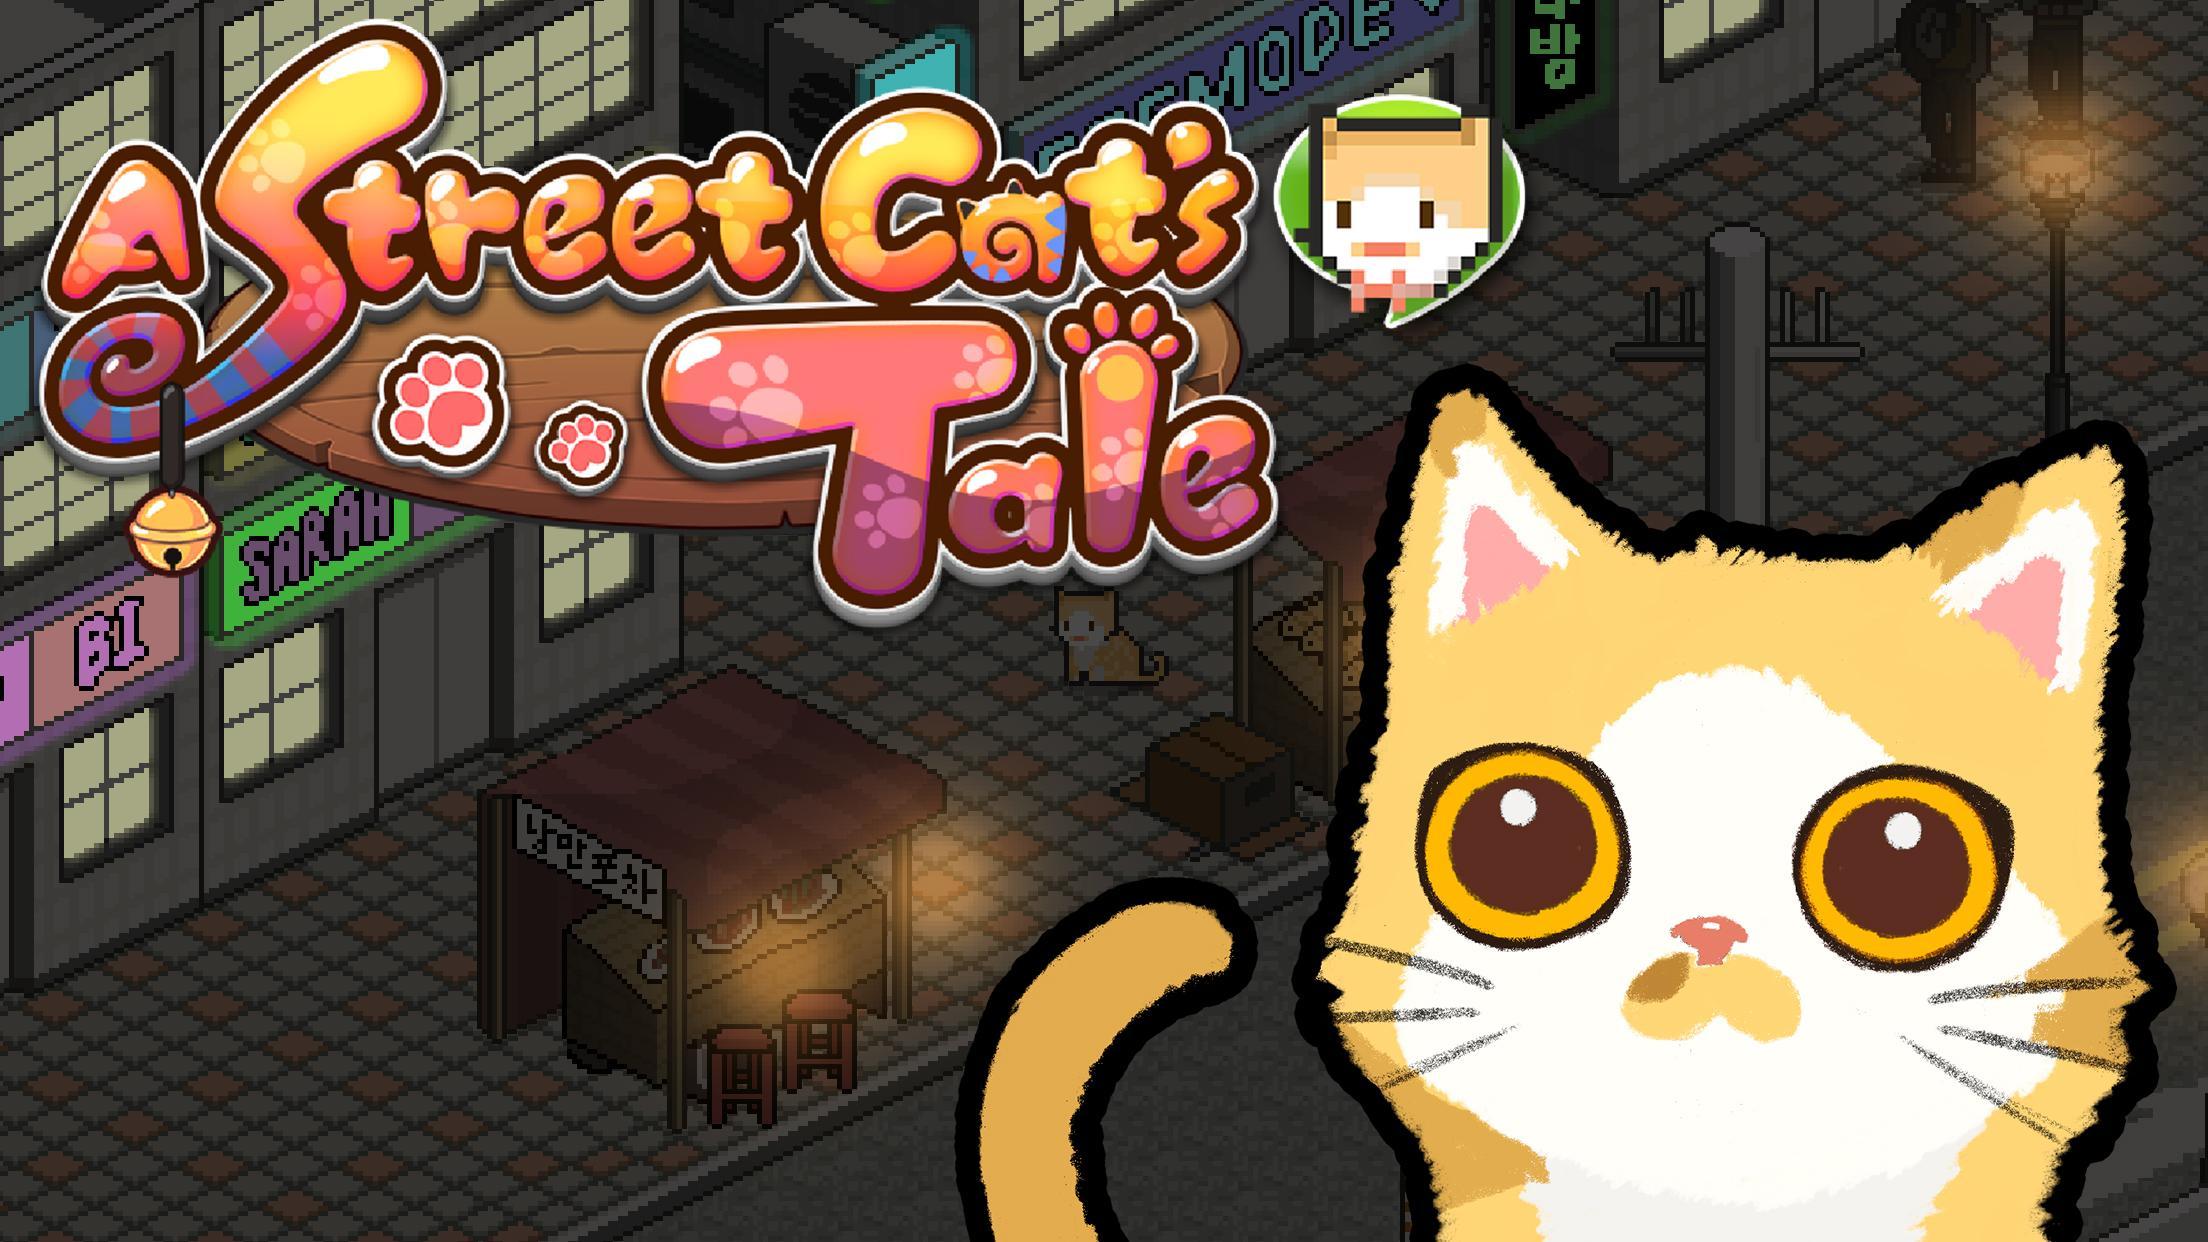 Hello street cat live. Игра a Street Cat's Tale. A Street Cat's Tale последняя версия. Игры про котят. Пиксельные котики игра.